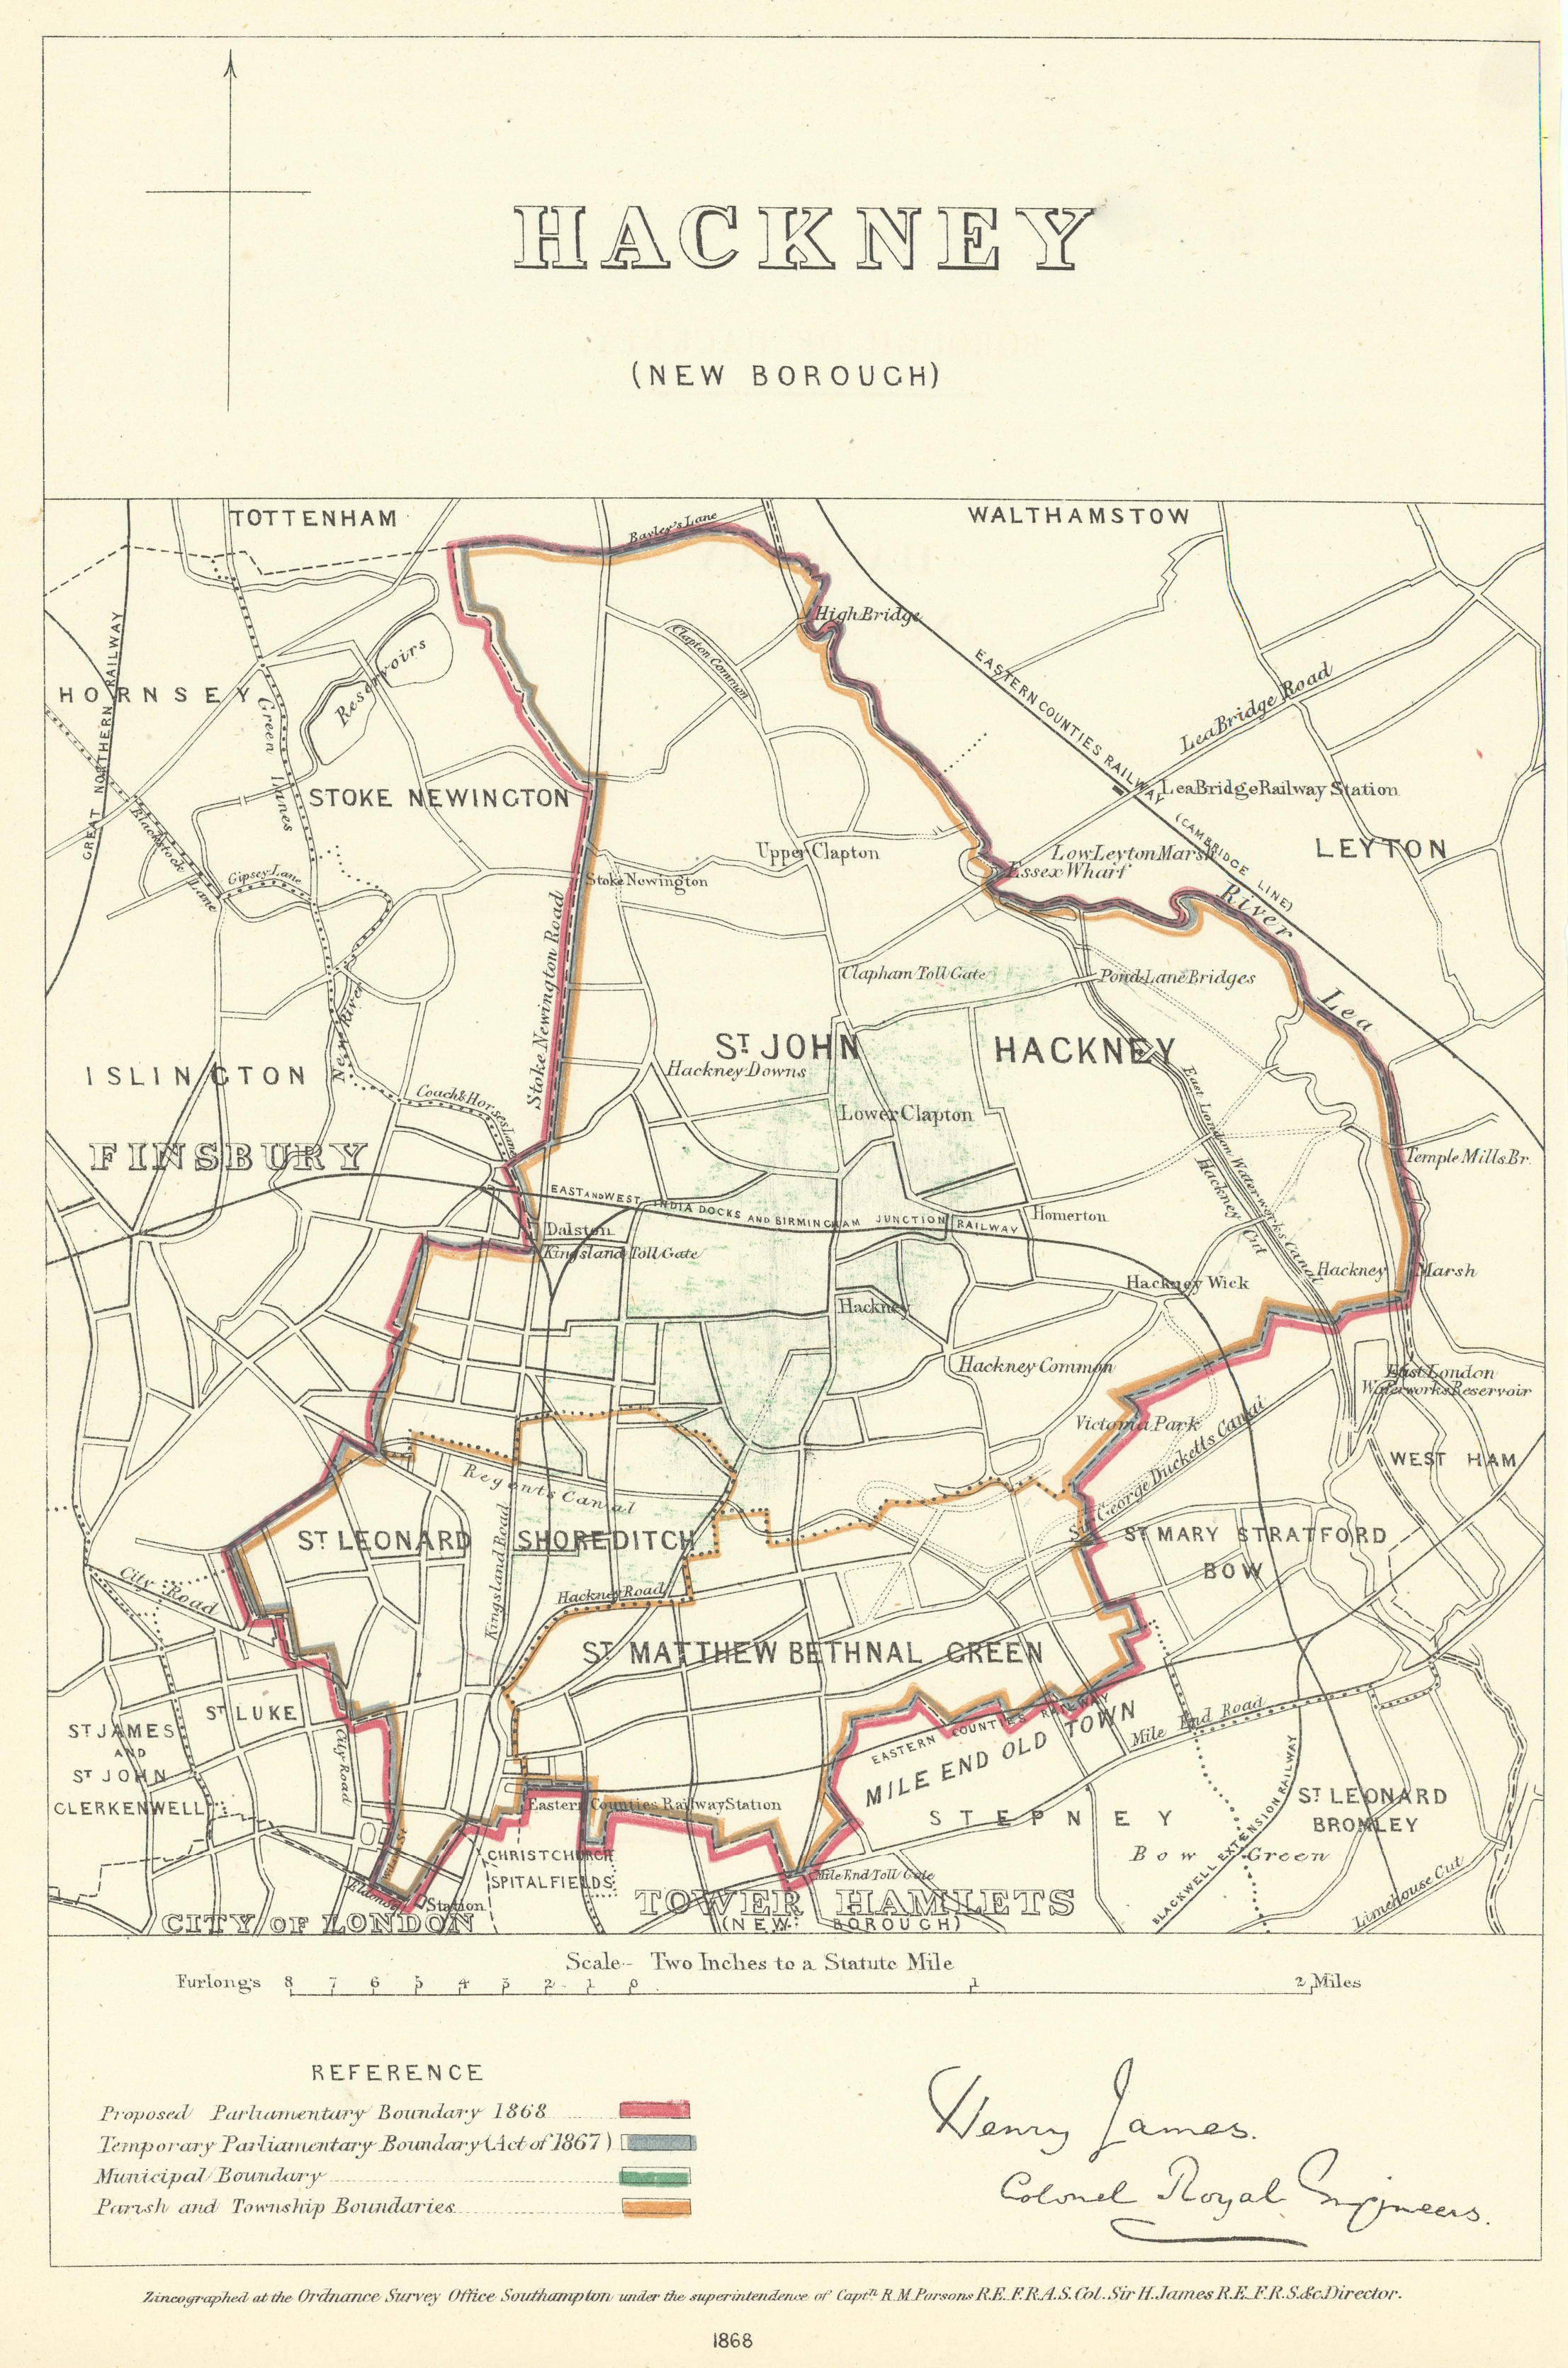 Hackney (New Borough), London. JAMES. Parliamentary Boundary Commission 1868 map